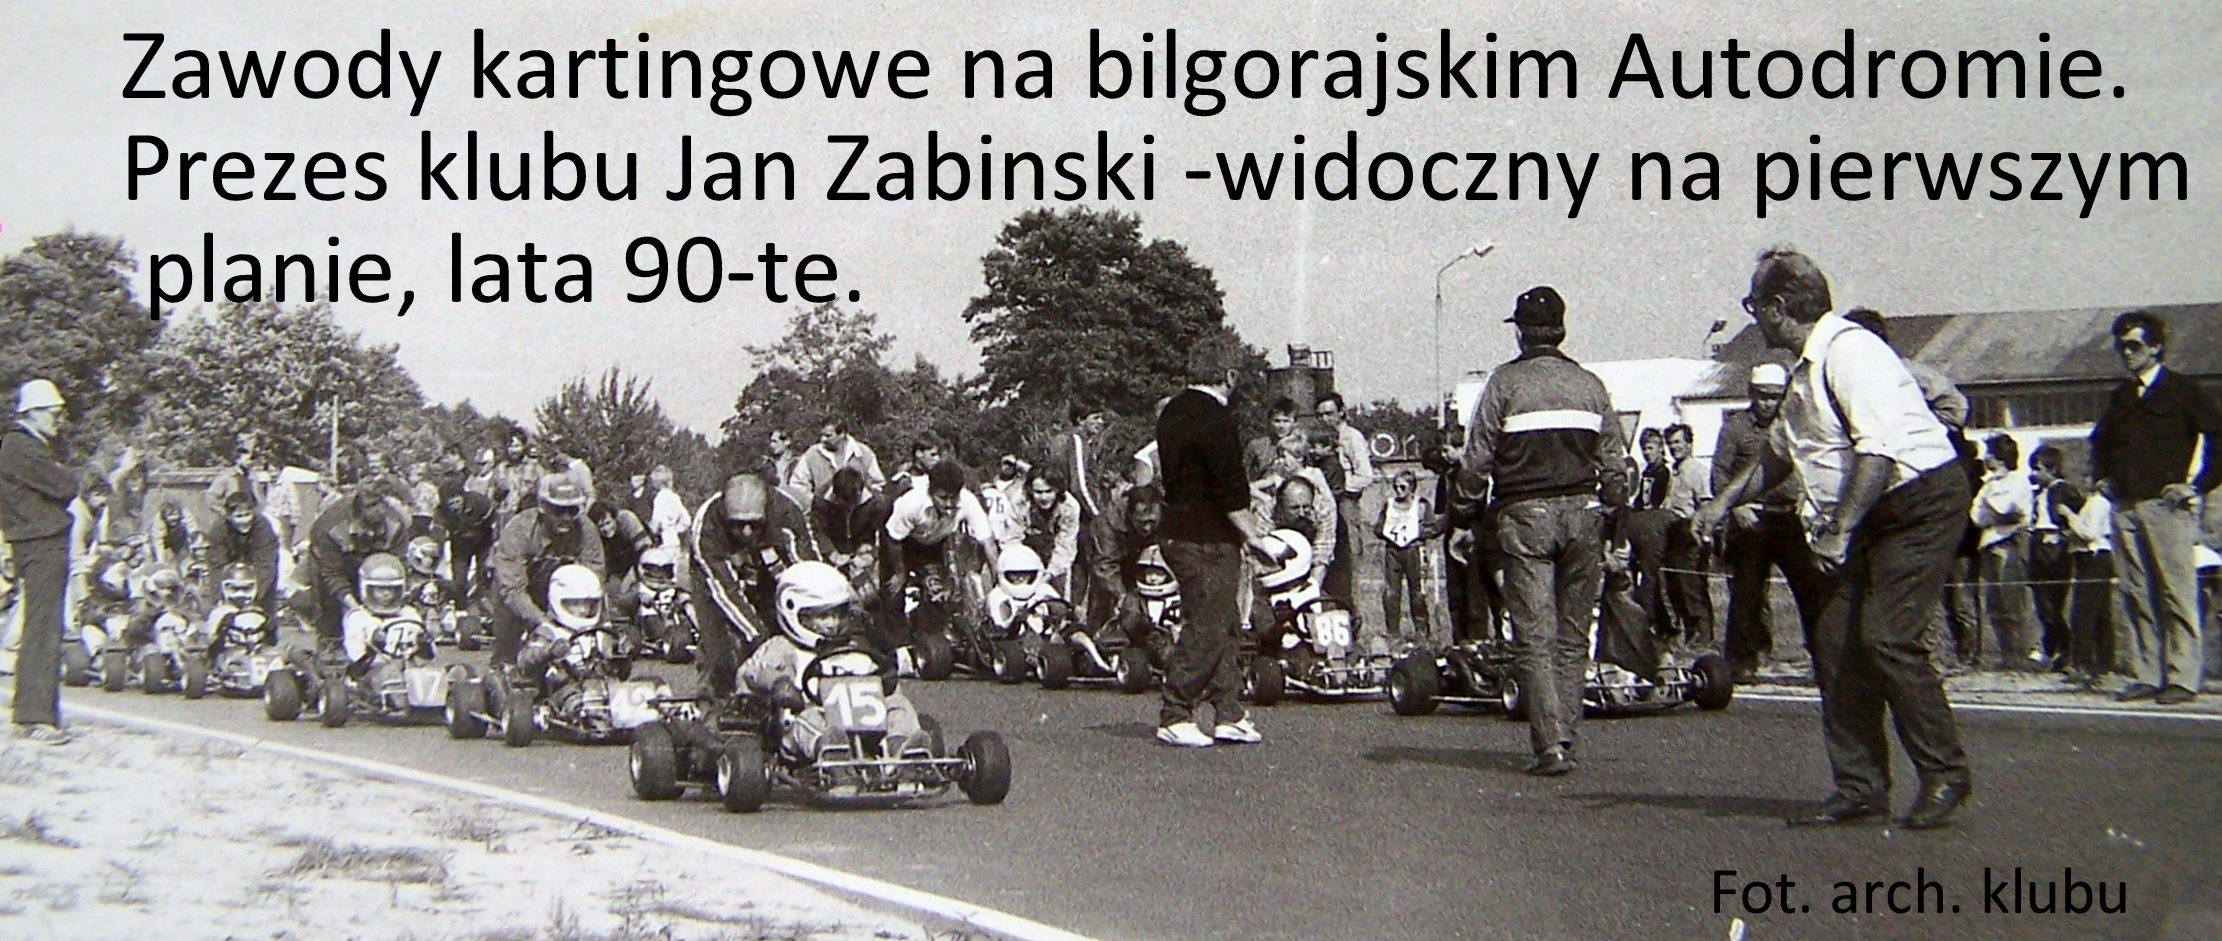 J. Żabiński